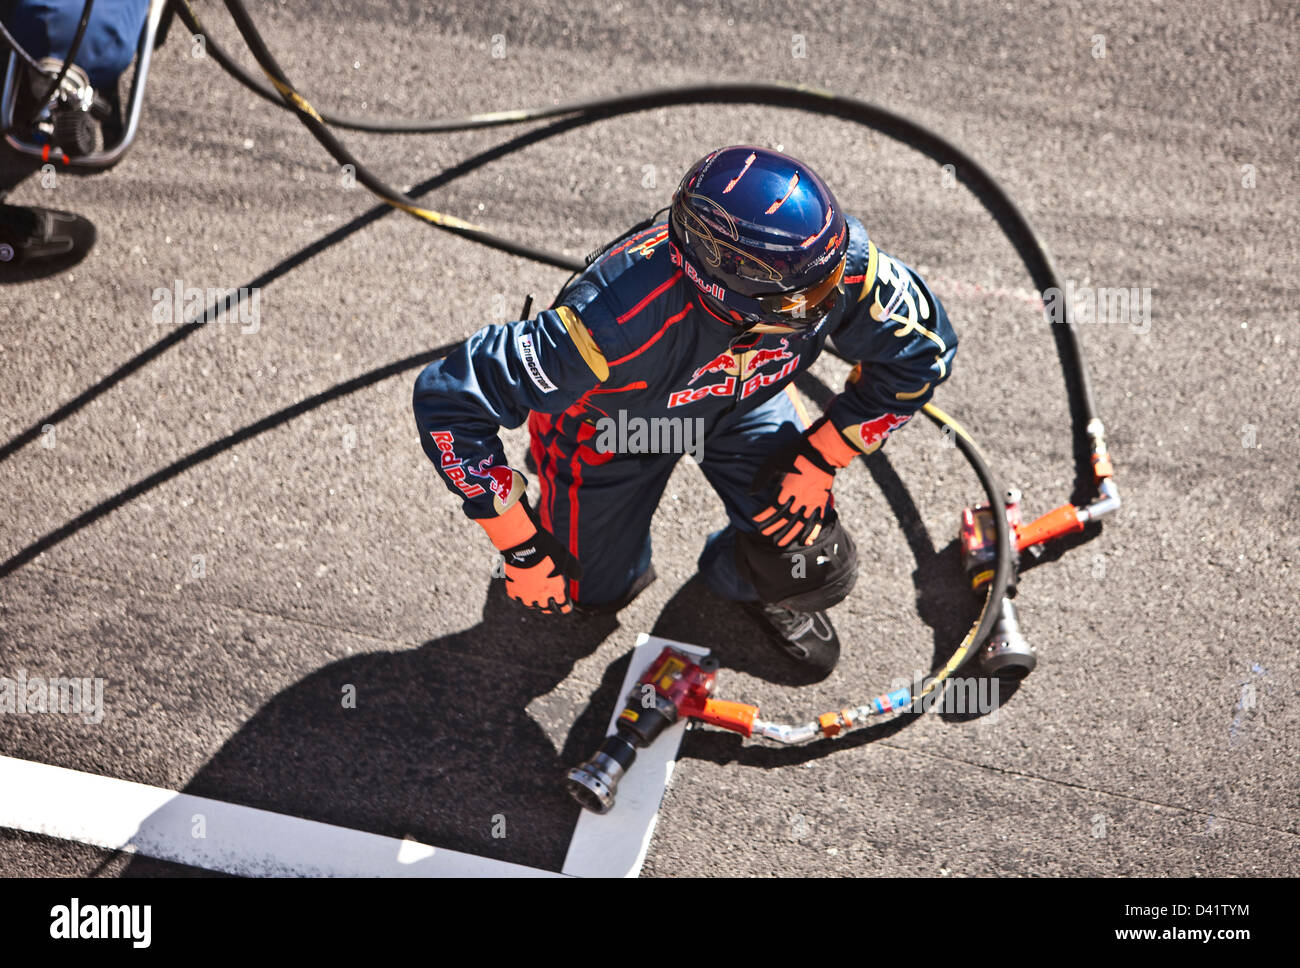 Formel 1 Wartung Mechaniker, Barcelona, 27 02 10 Stockfoto